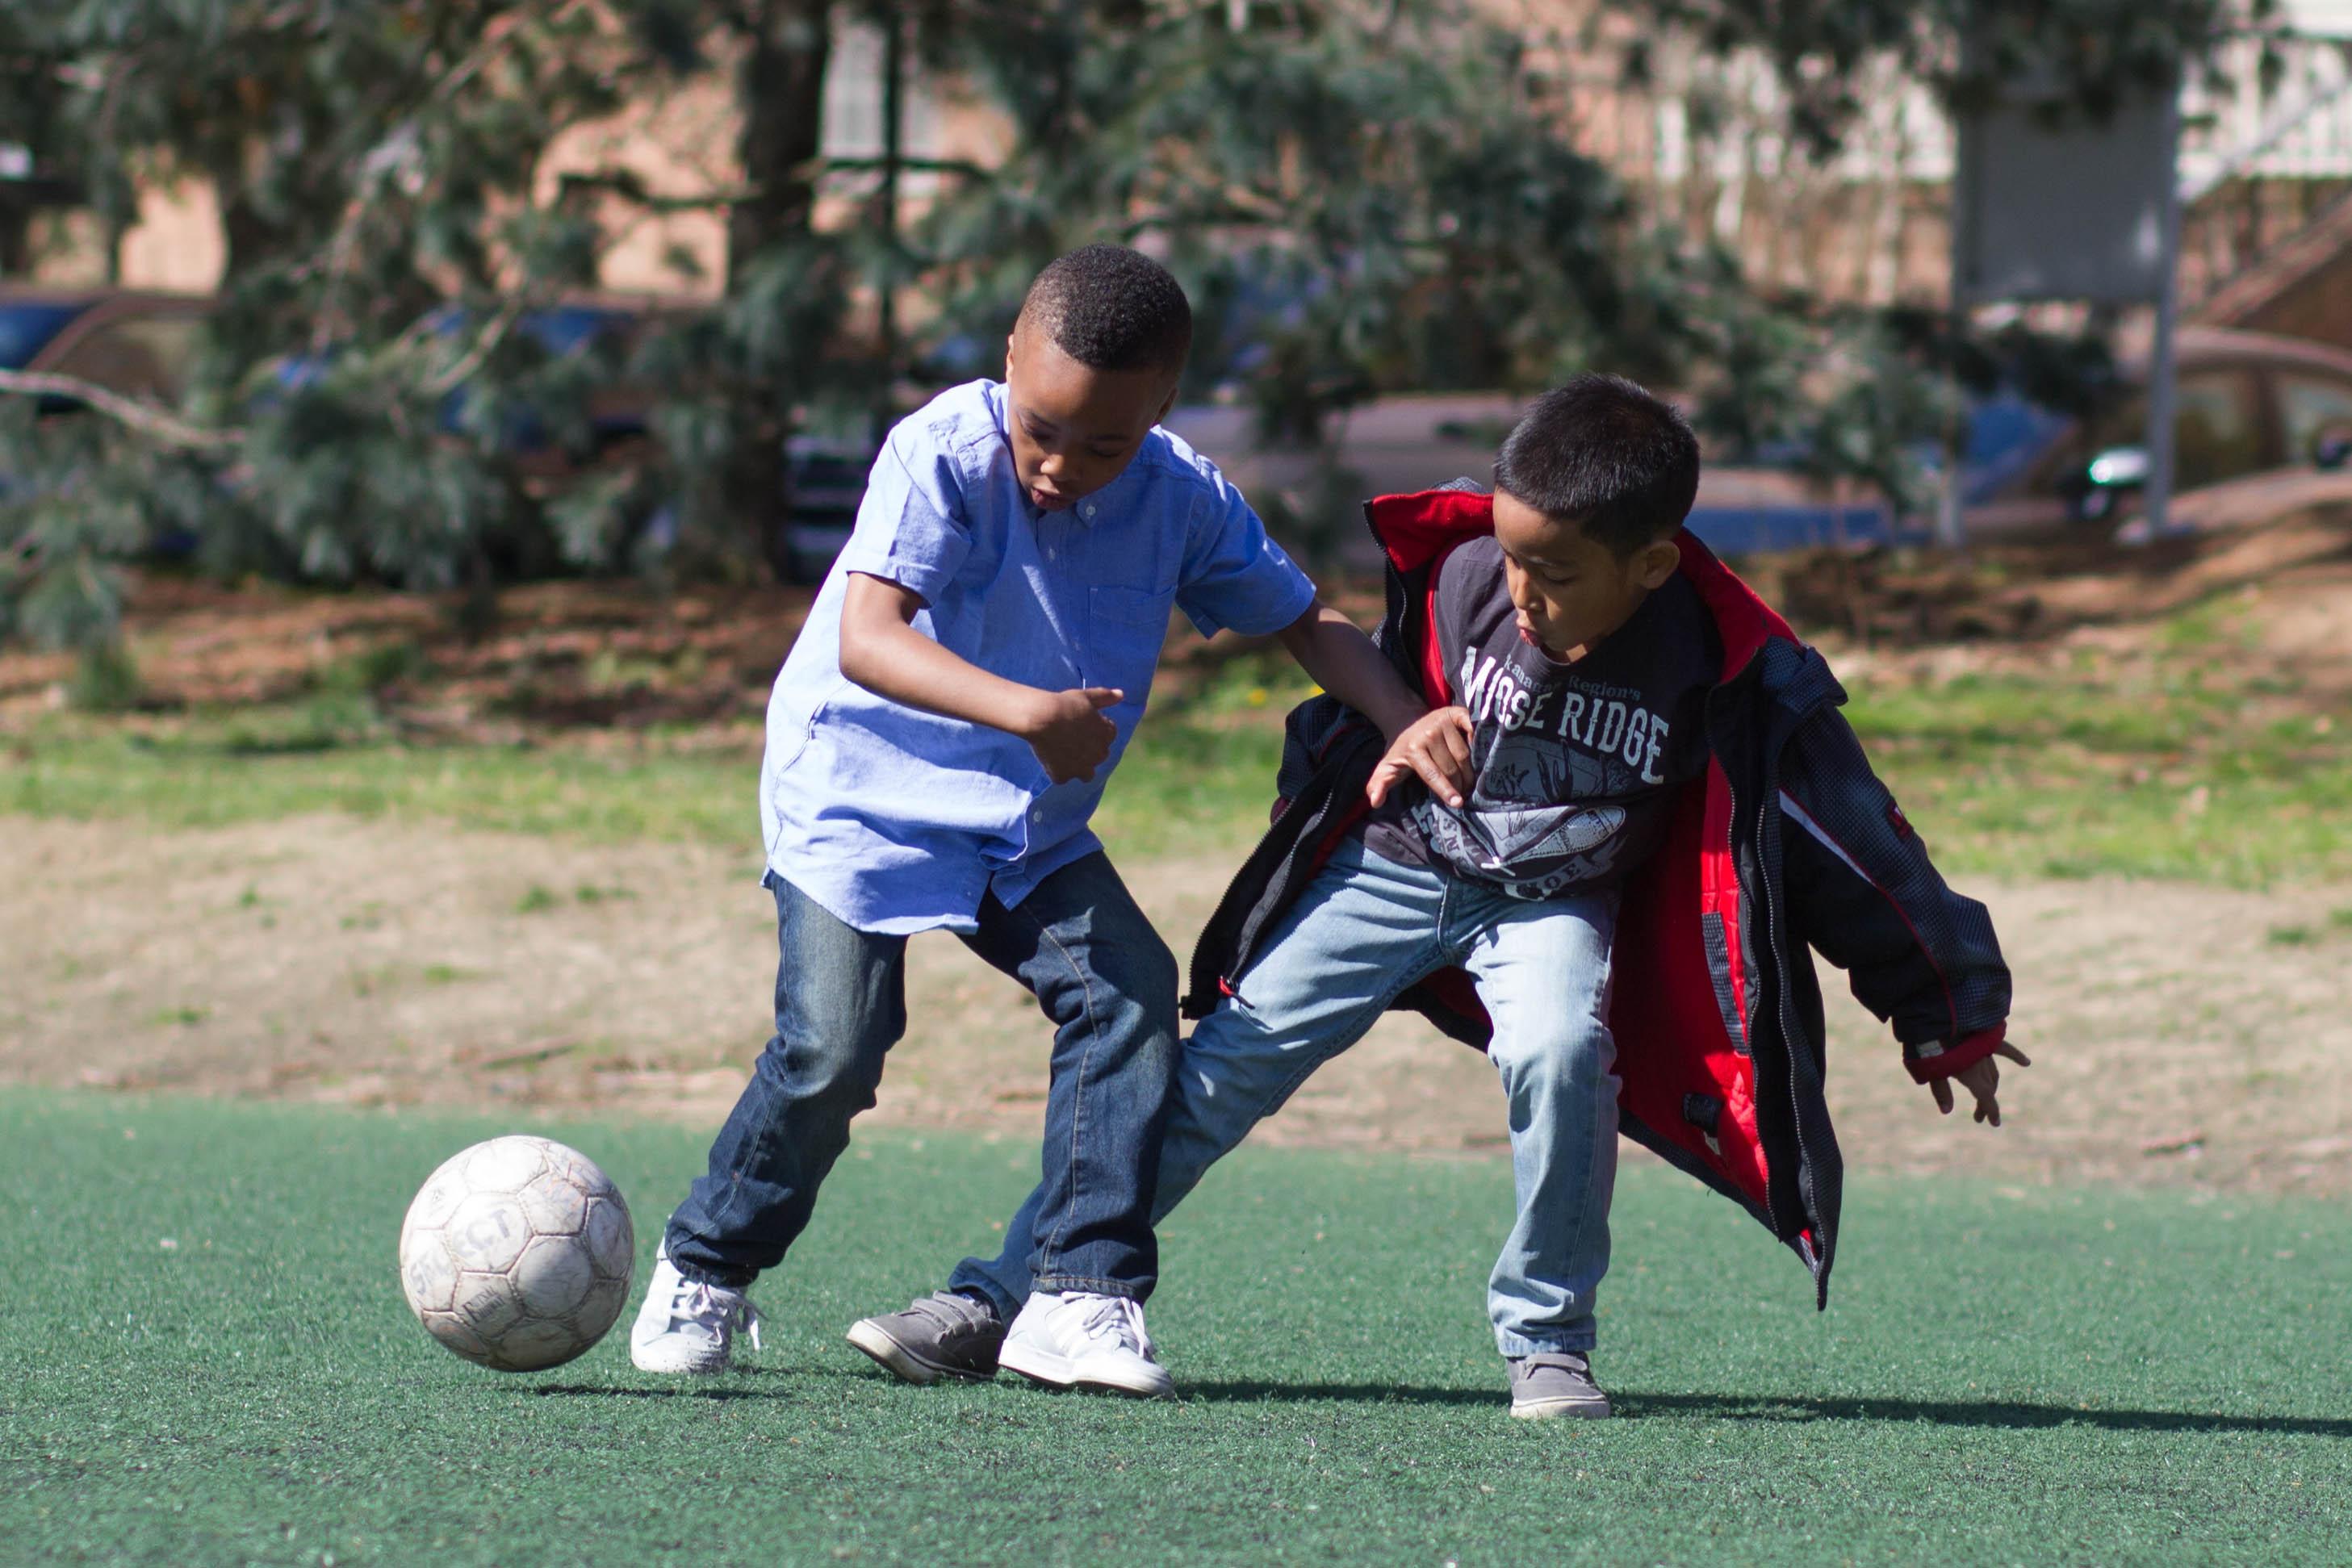 kids playing soccer